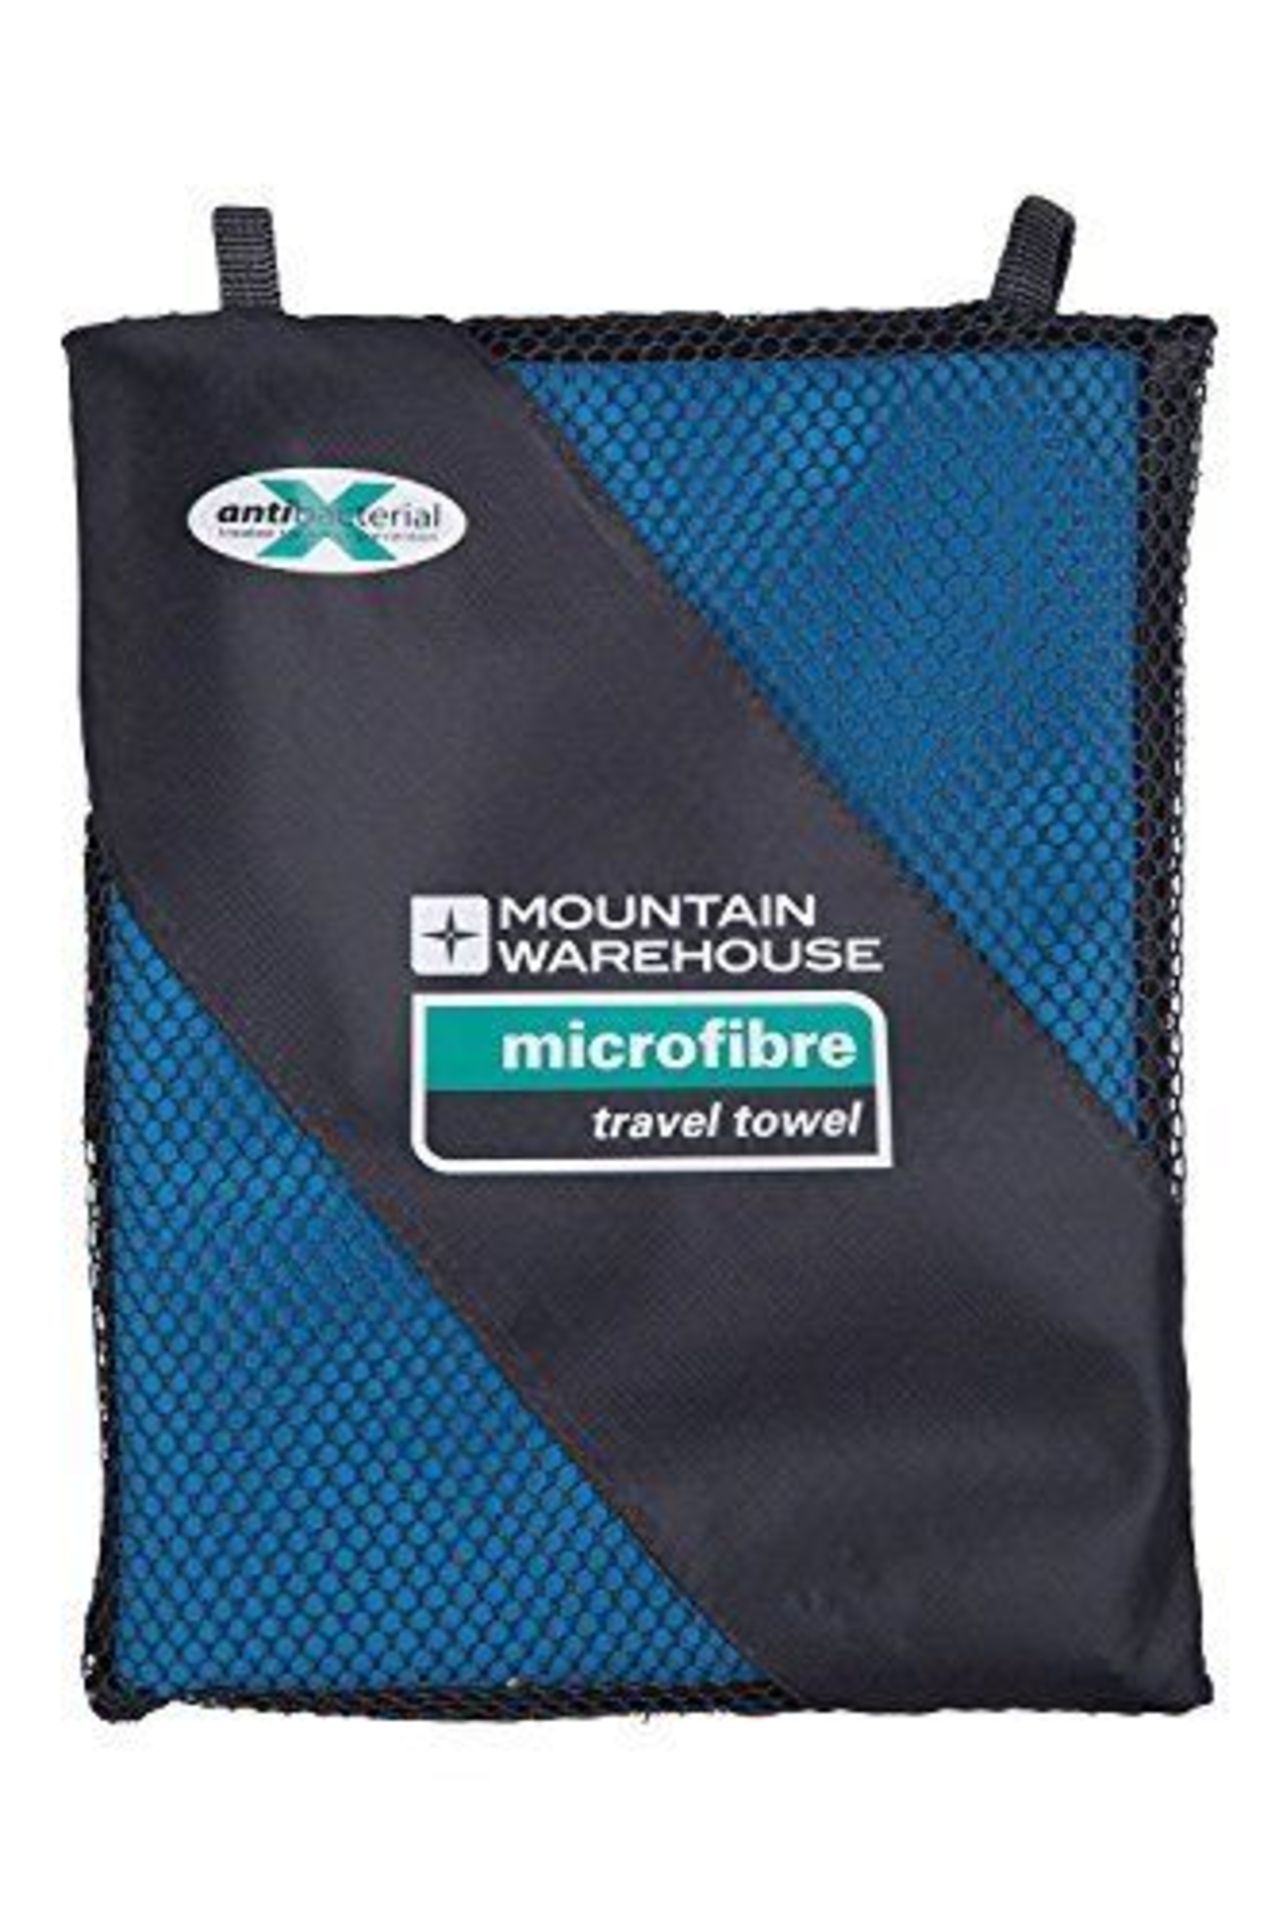 Grade A Endura Thermo Lite Leg Warmers & 70cm X 130cm Mountain Ware House Microfibre Travel Towel - Image 2 of 3